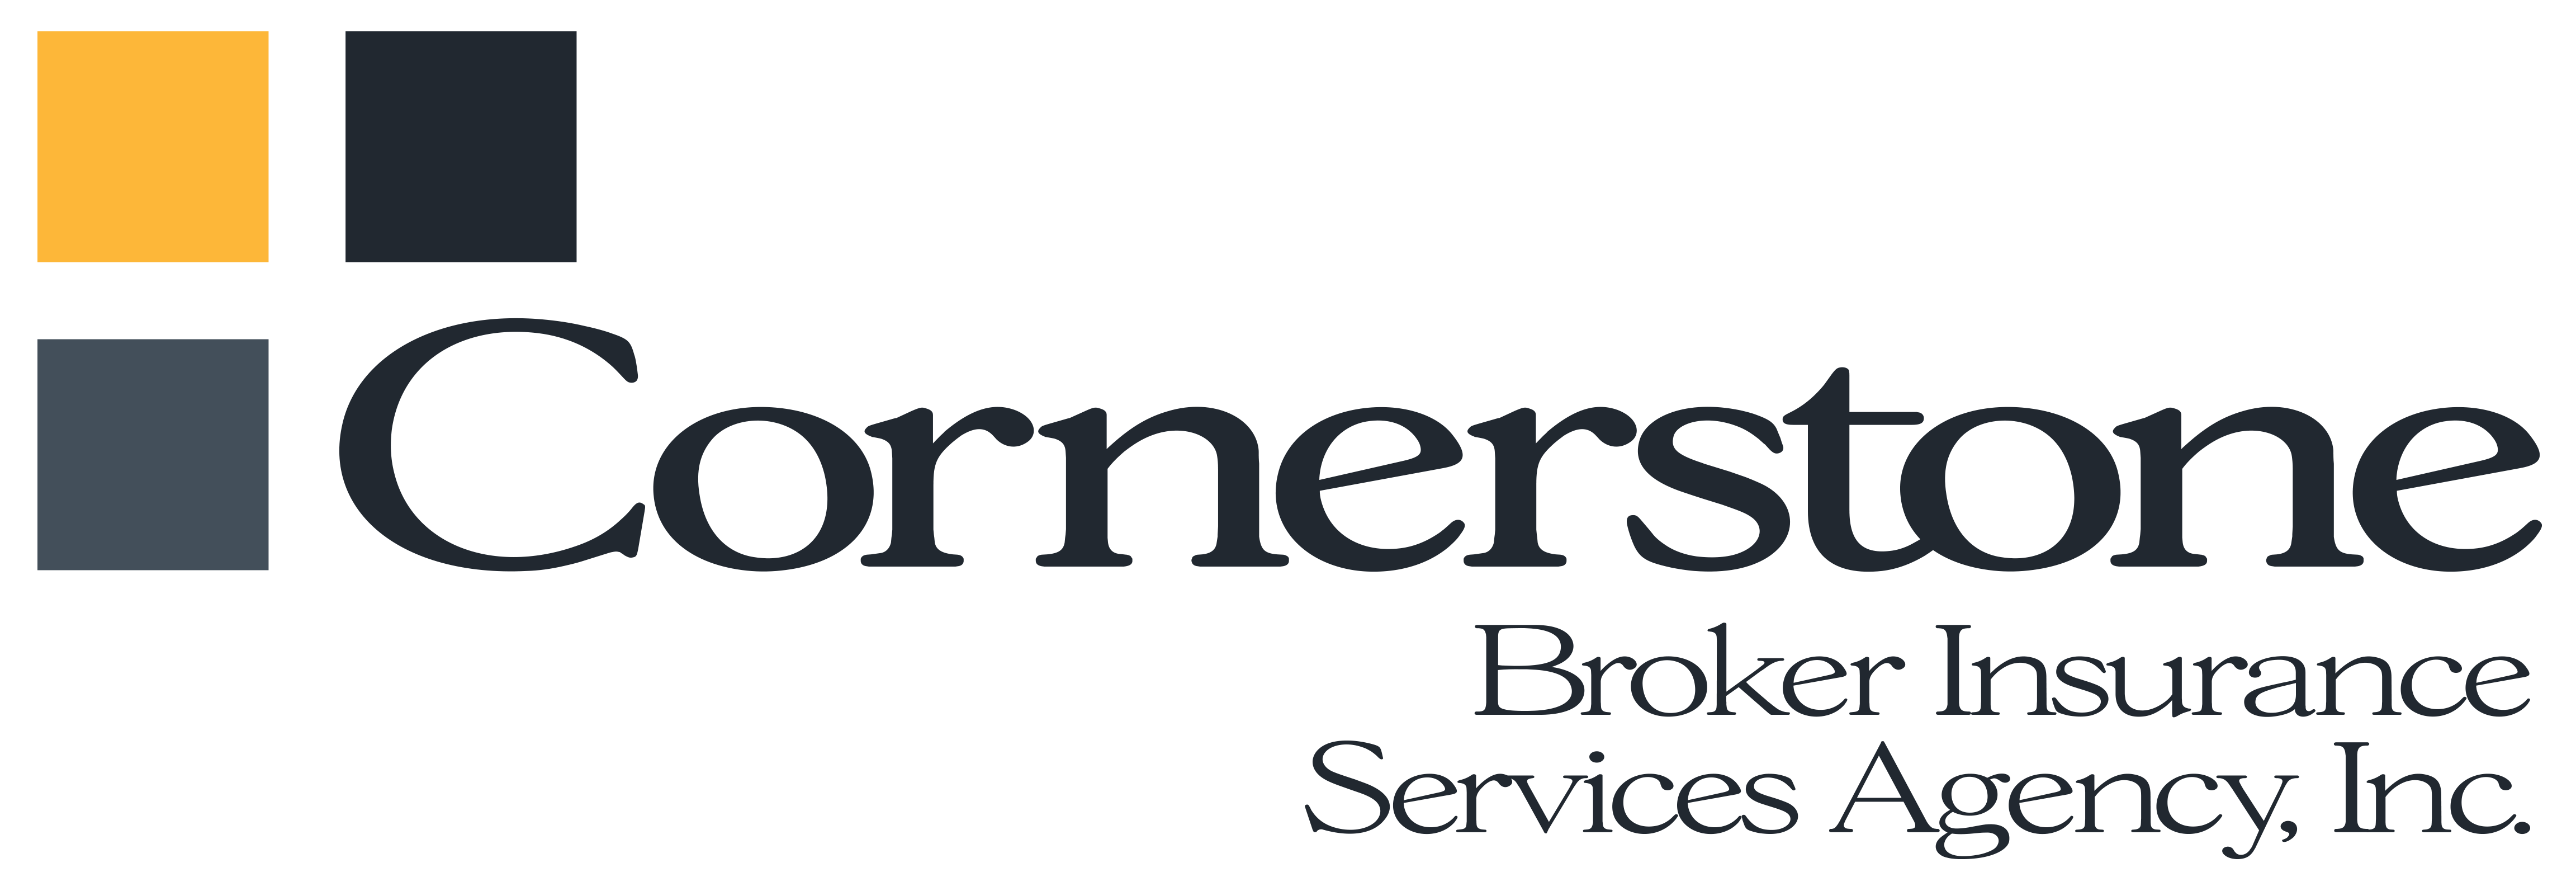 Cornerstone Broker Insurance Services Agency Company Logo